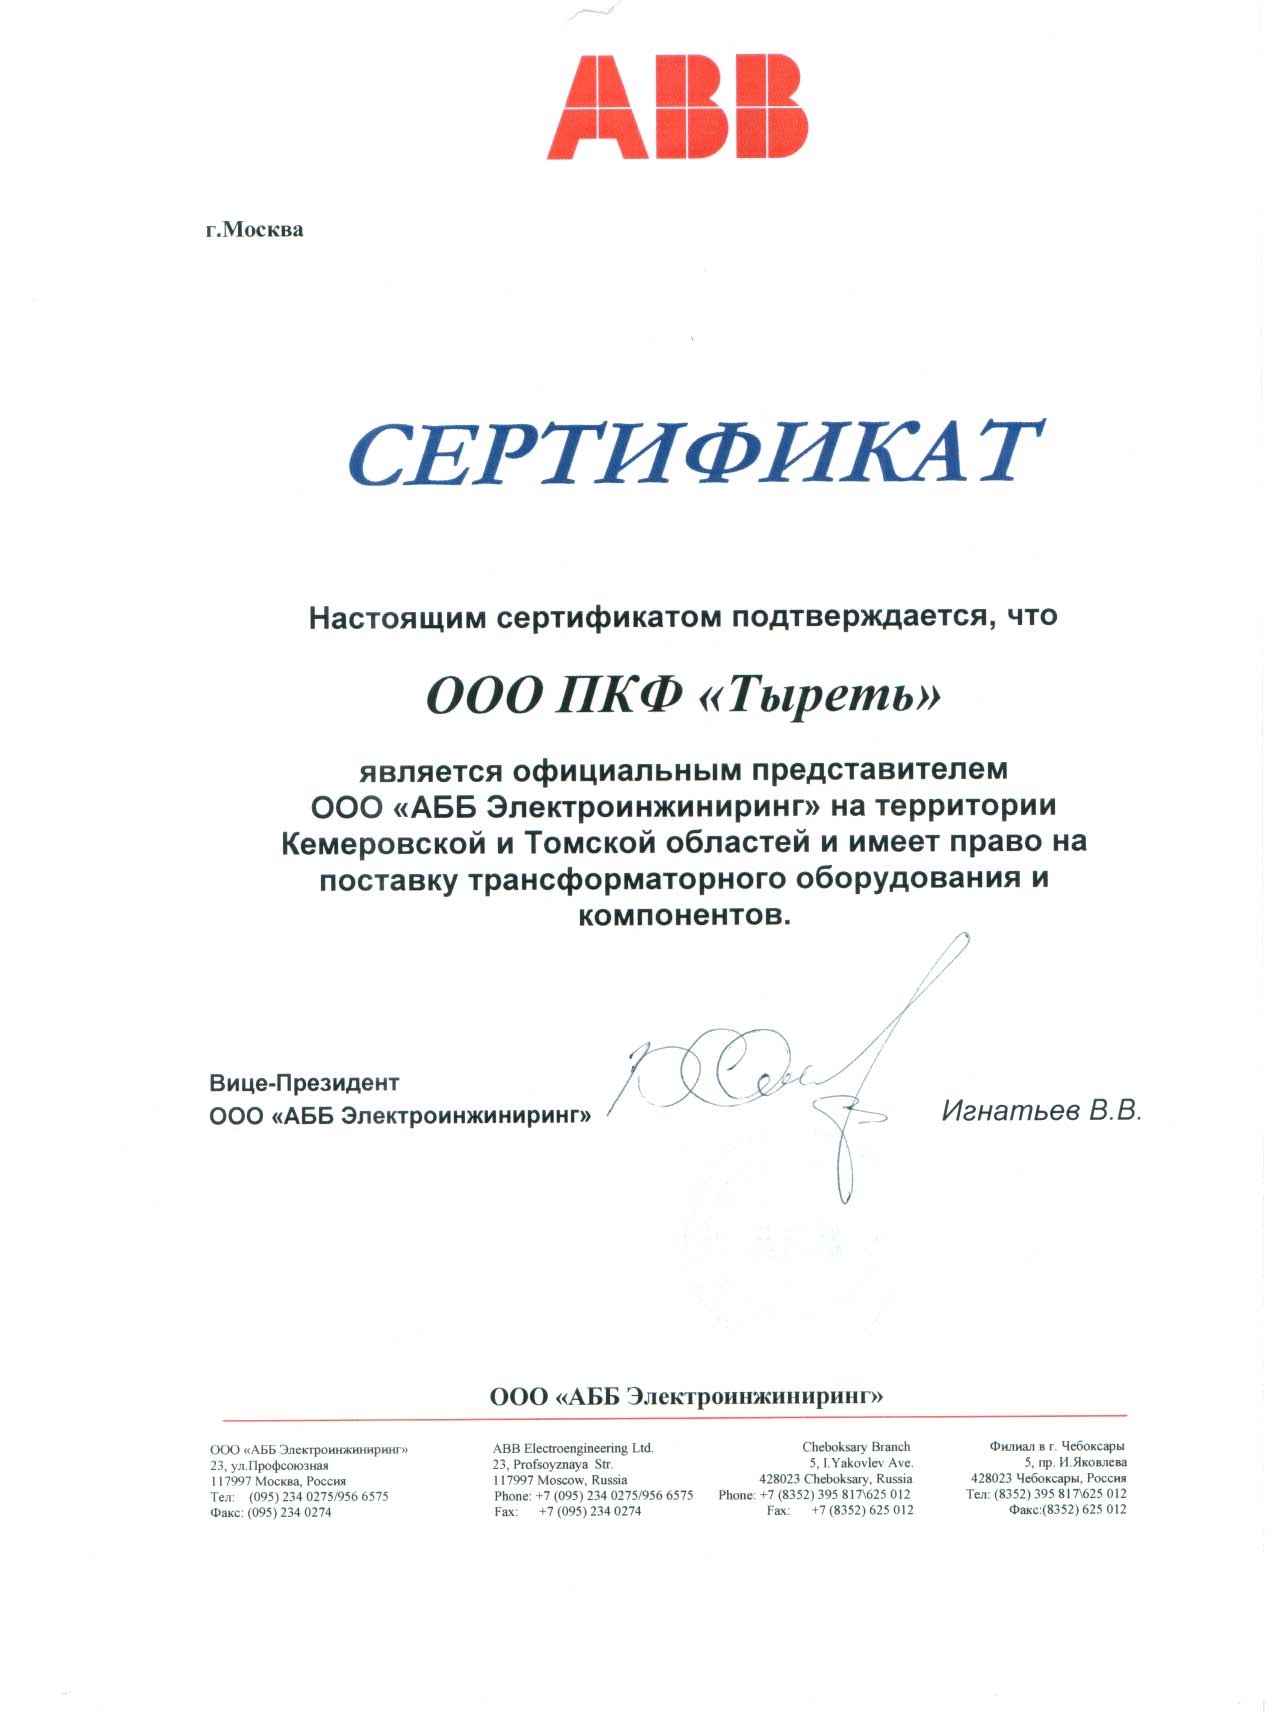 Сертификат дилера с АББ Электроинжиниринг